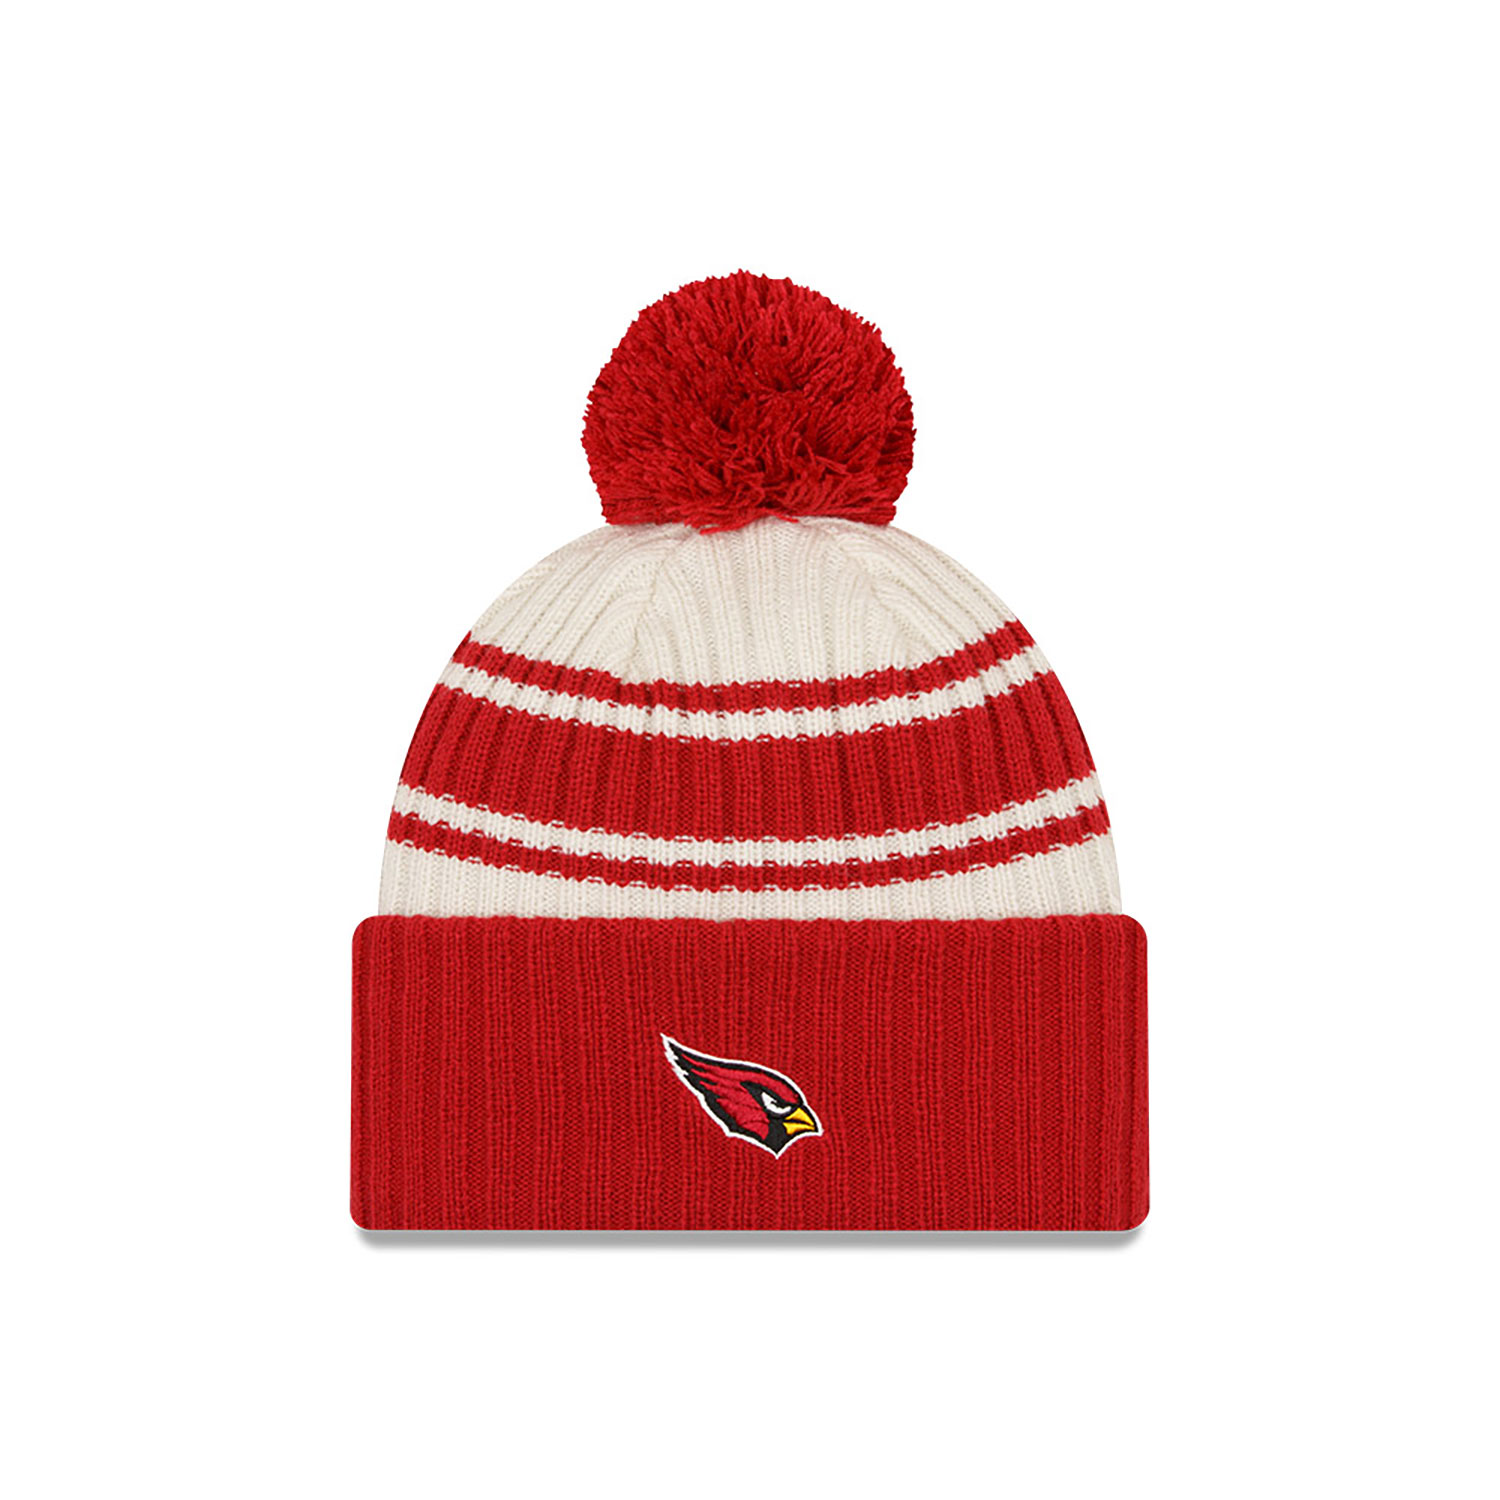 Arizona Cardinals NFL Sideline Red Beanie Hat